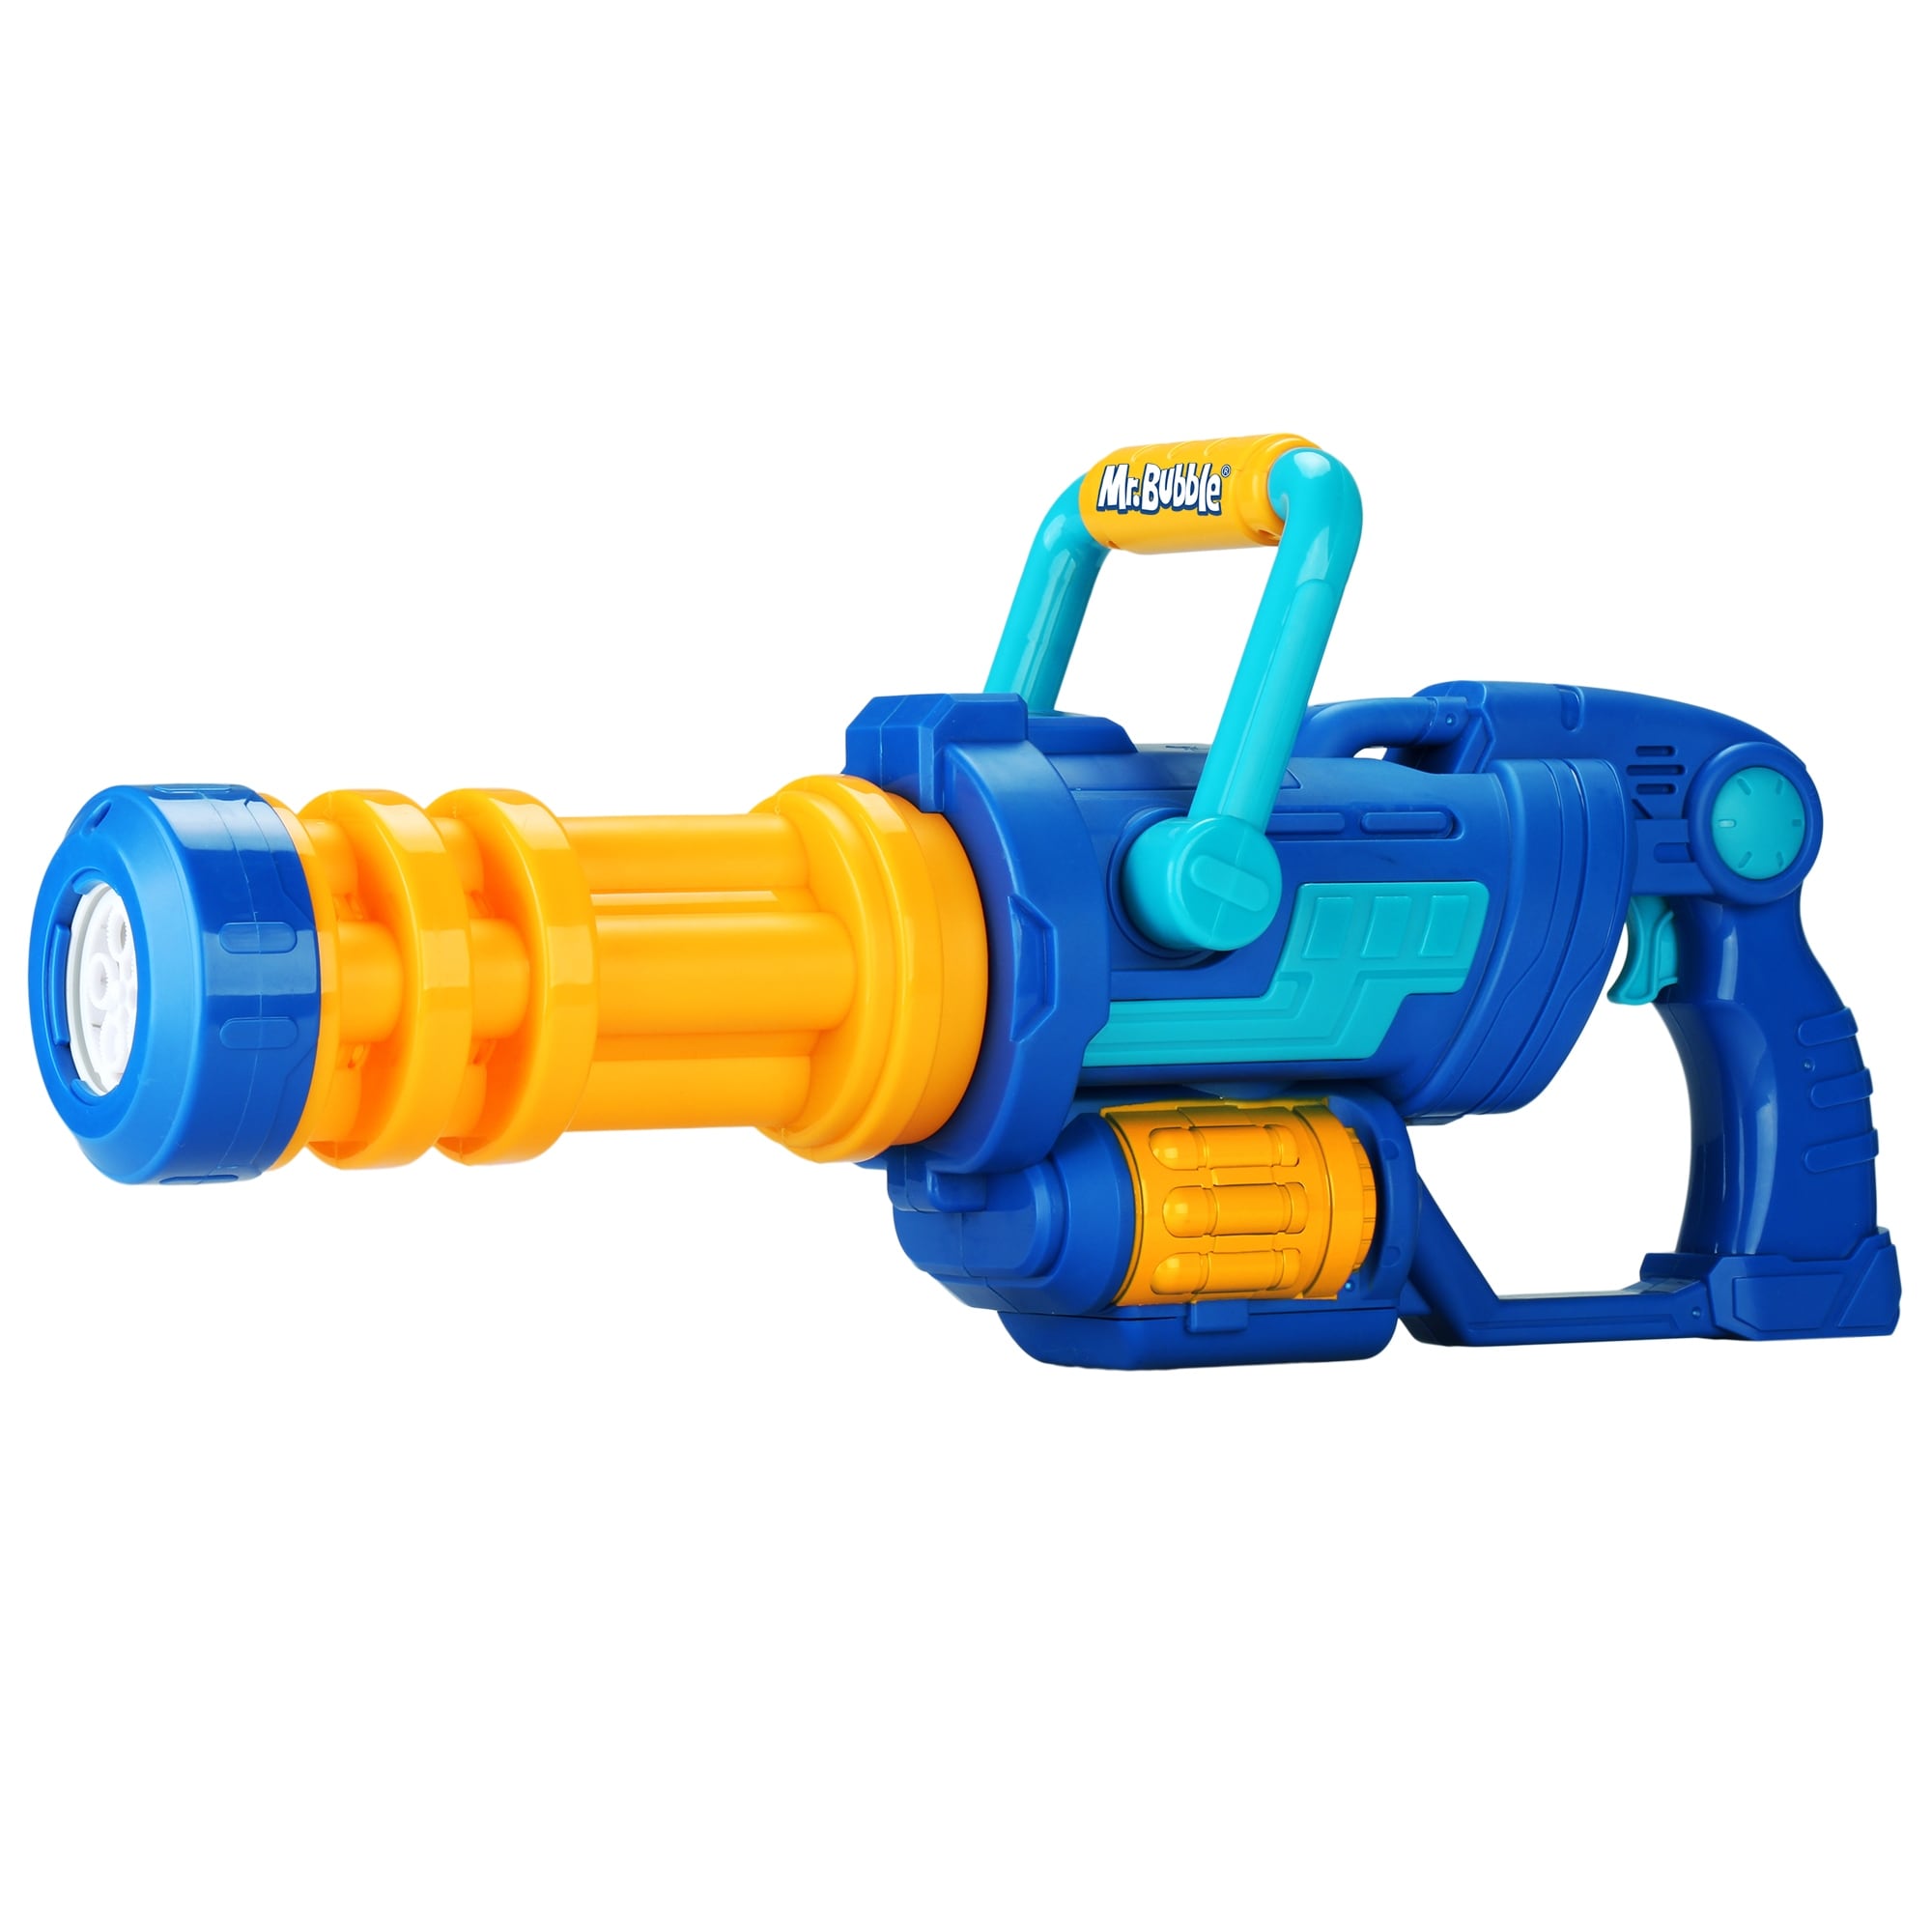 Kid Galaxy - Double Bubble Blaster Gun by Mr. Bubble